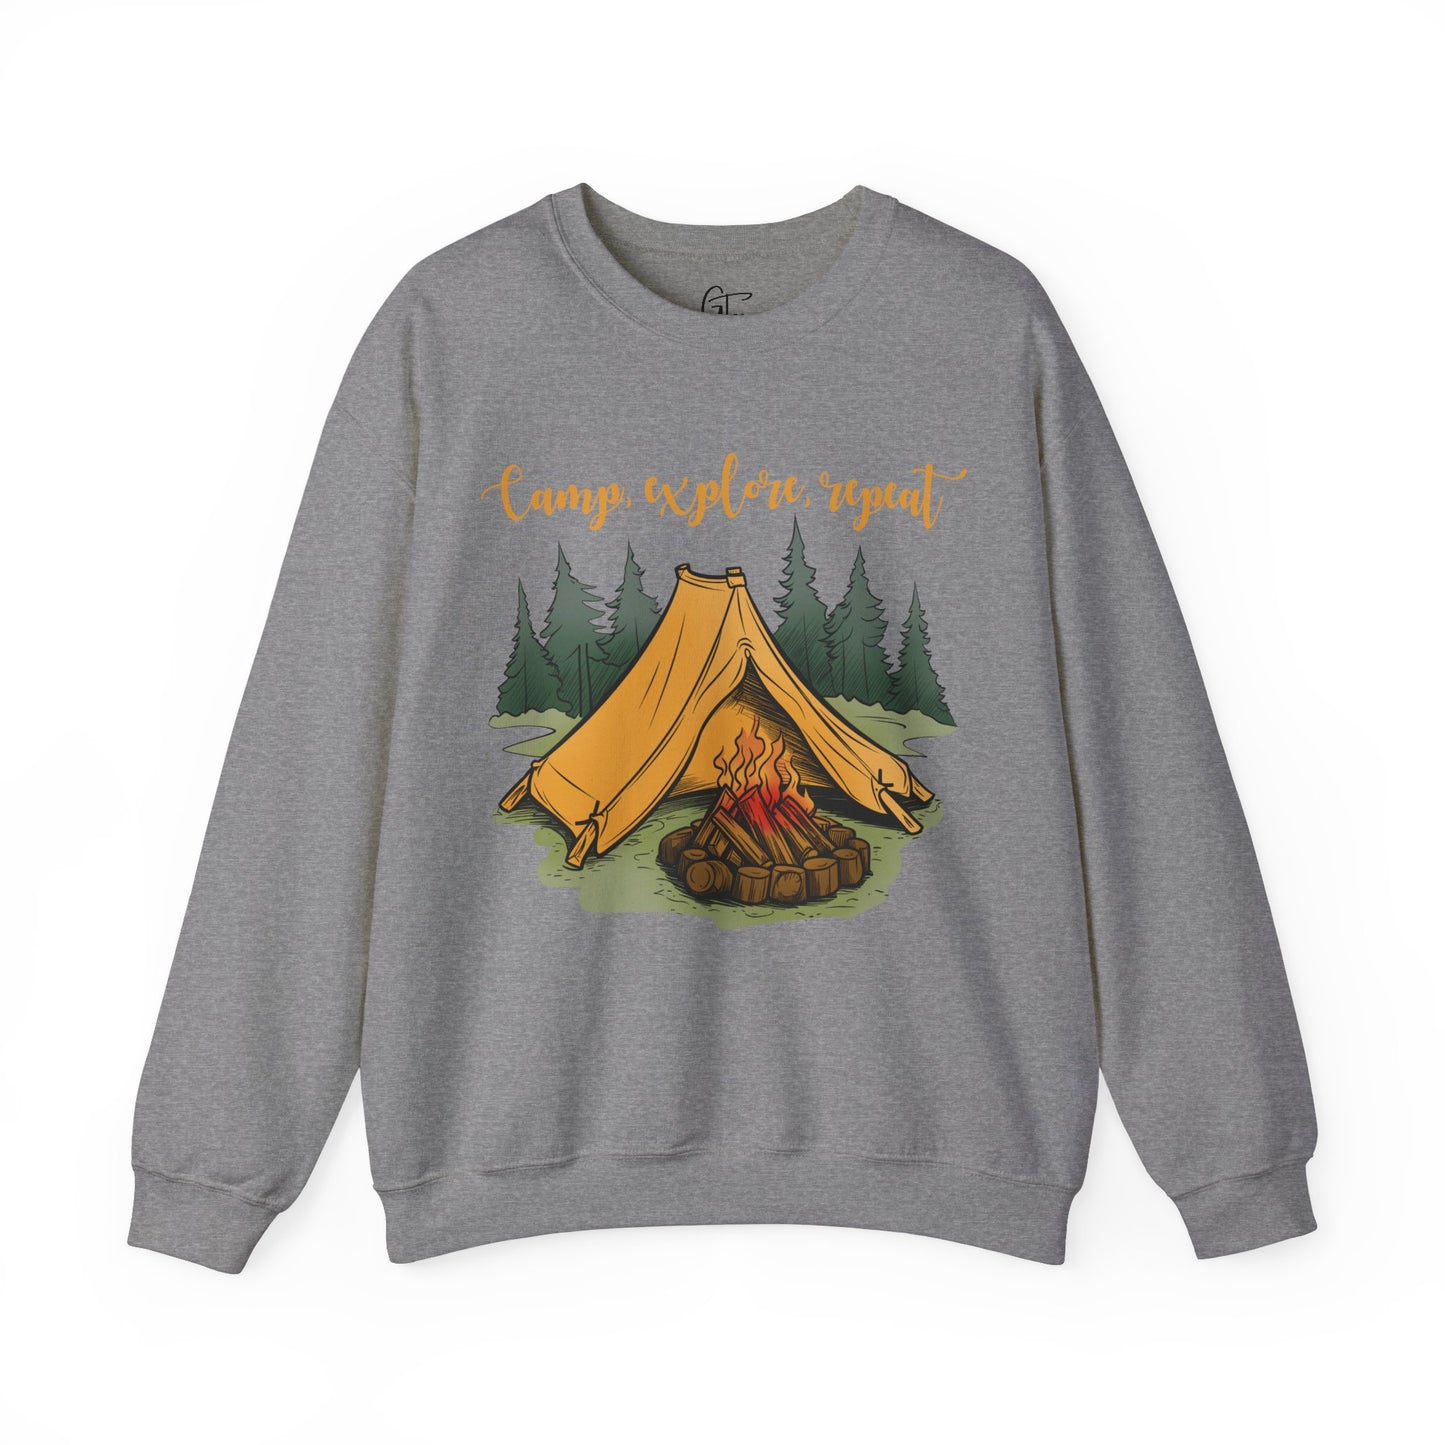 Camp Explore, Repeat Sweatshirt